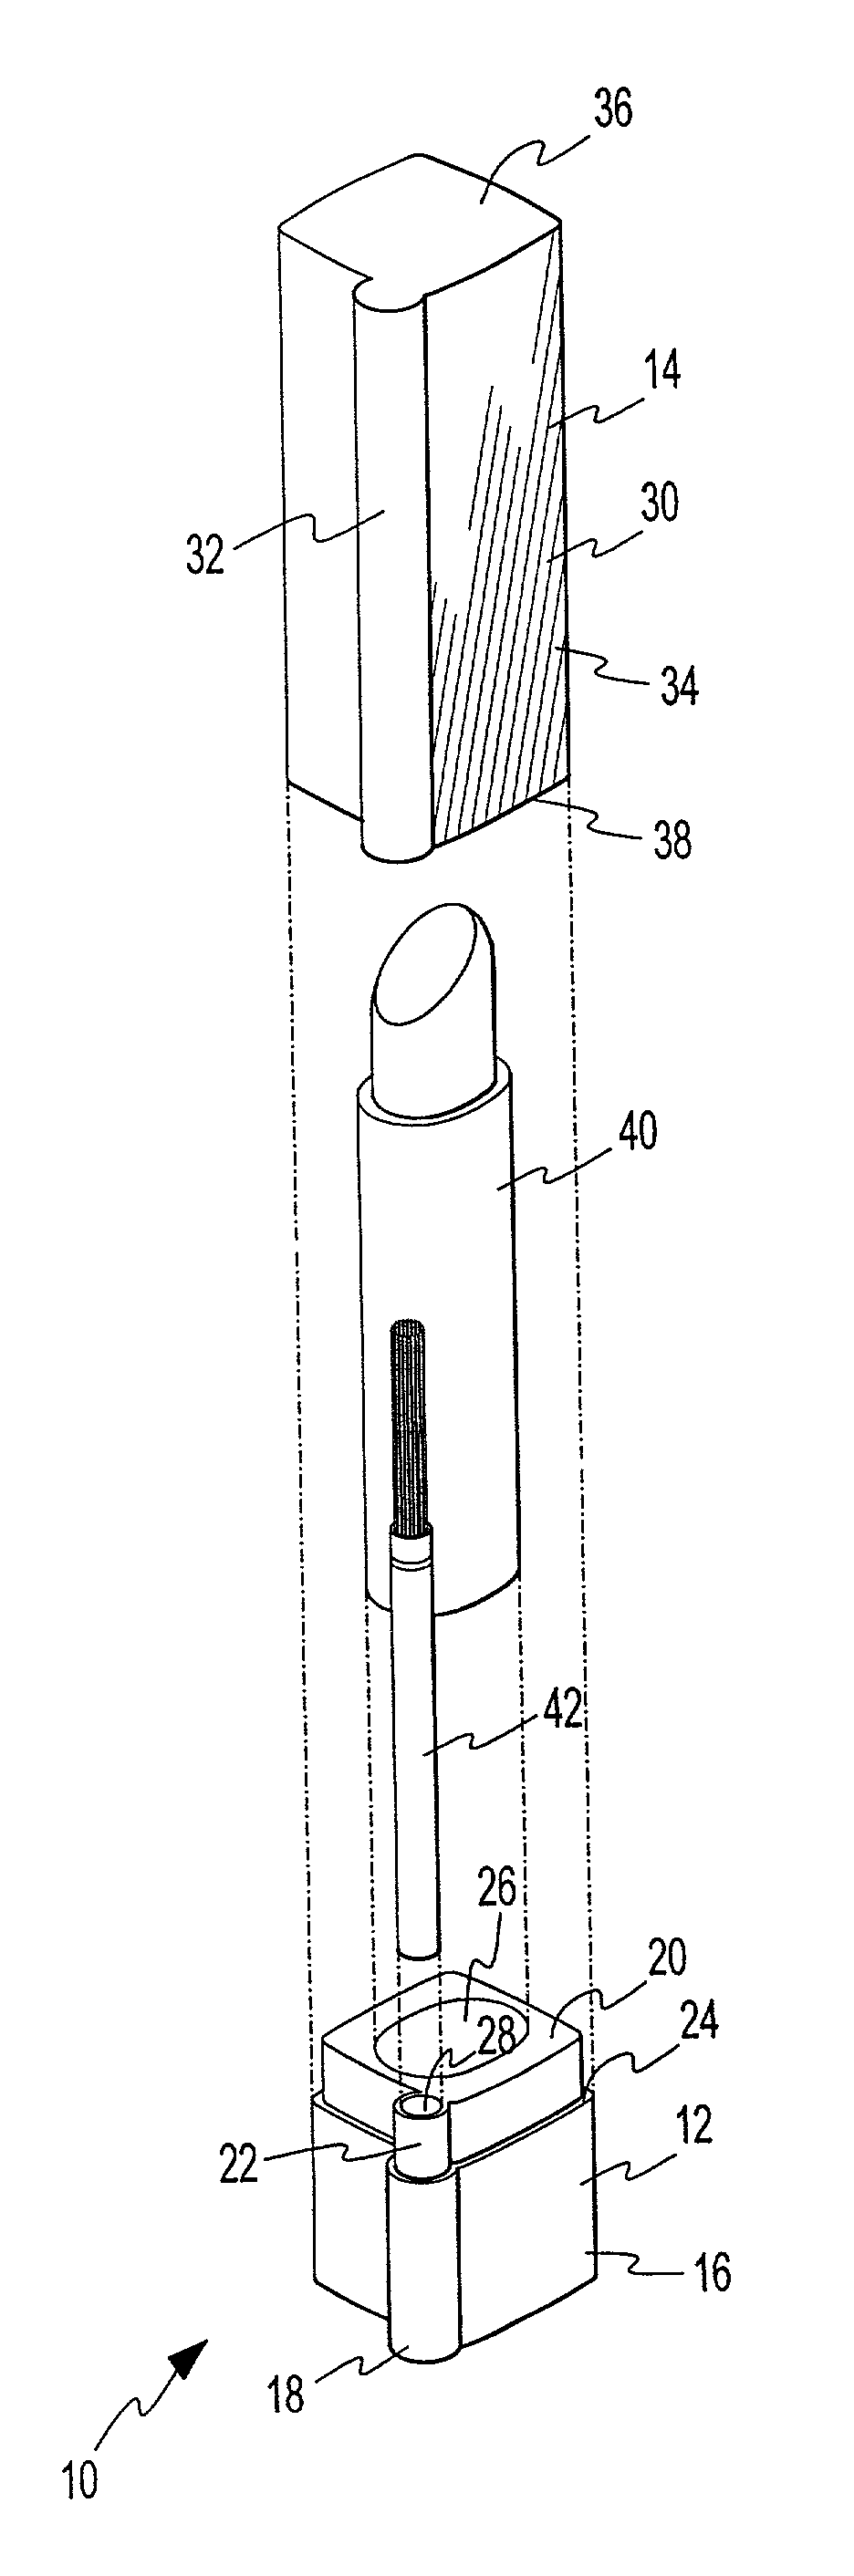 Cosmetic holder apparatus